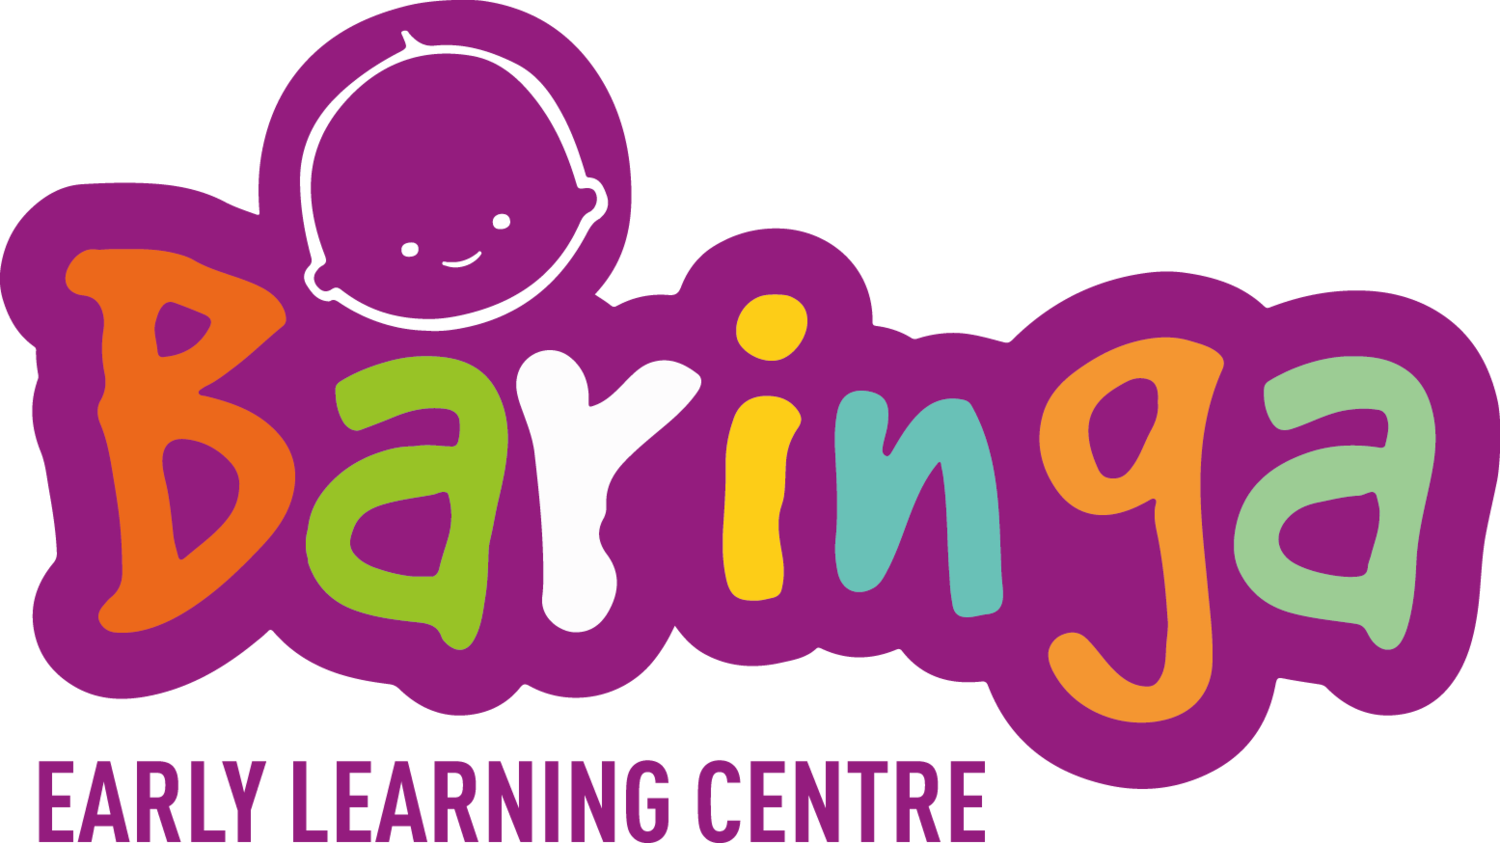 Baringa Early Learning Centre